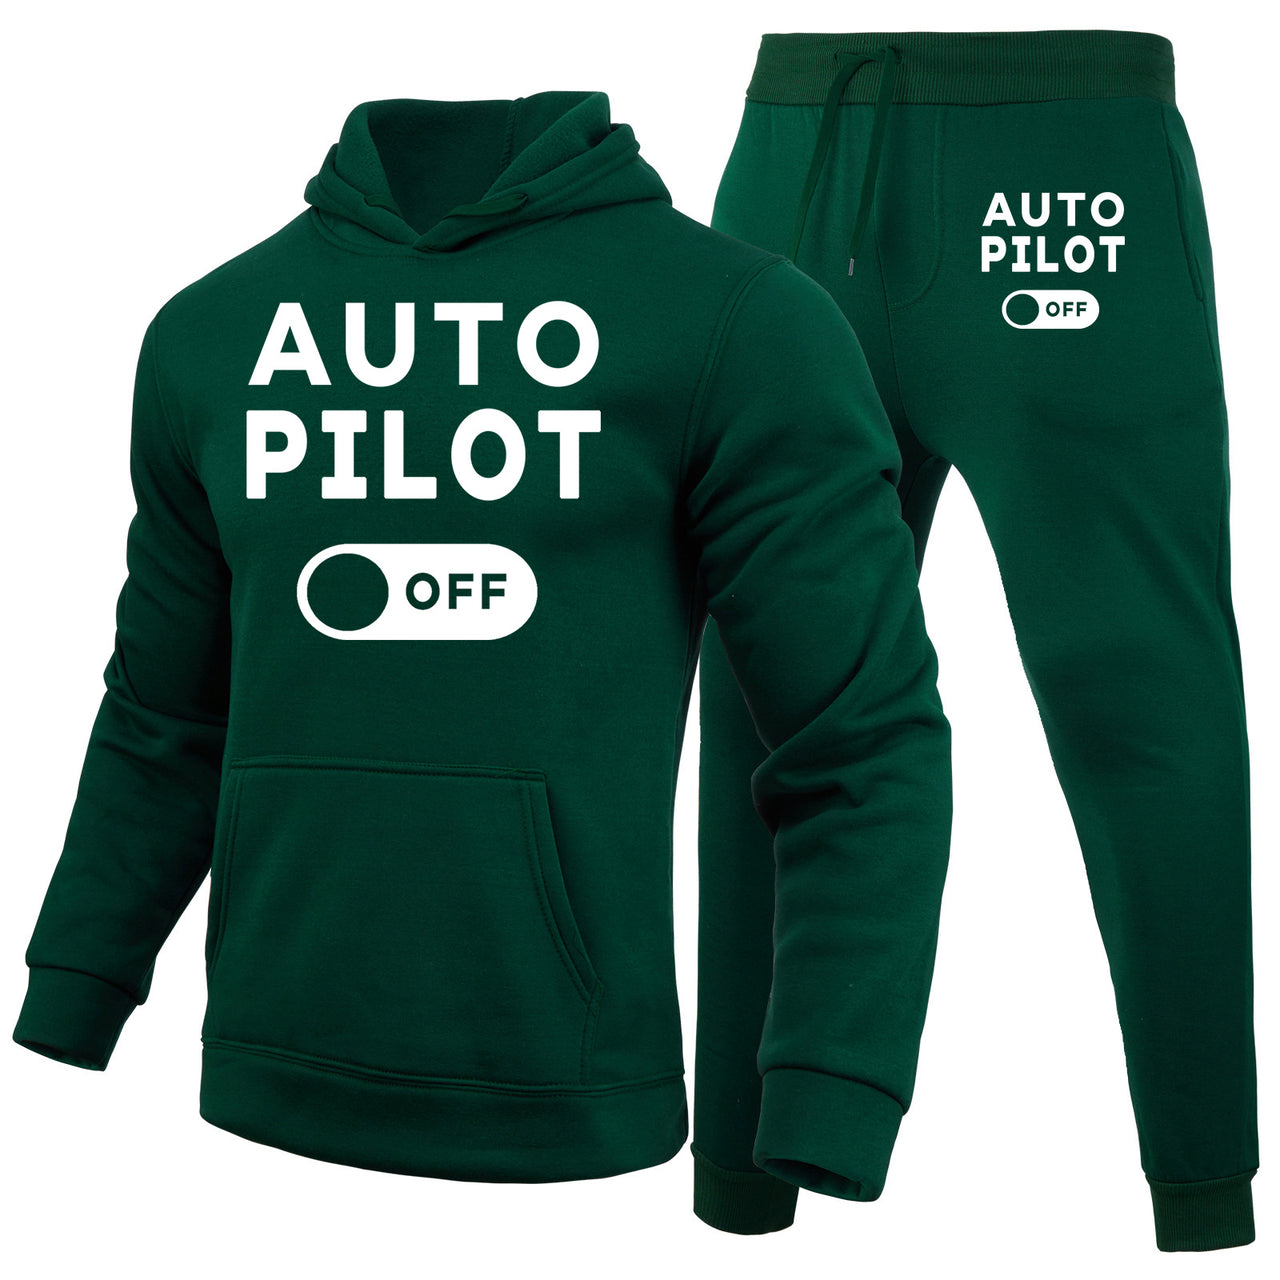 Auto Pilot Off Designed Hoodies & Sweatpants Set